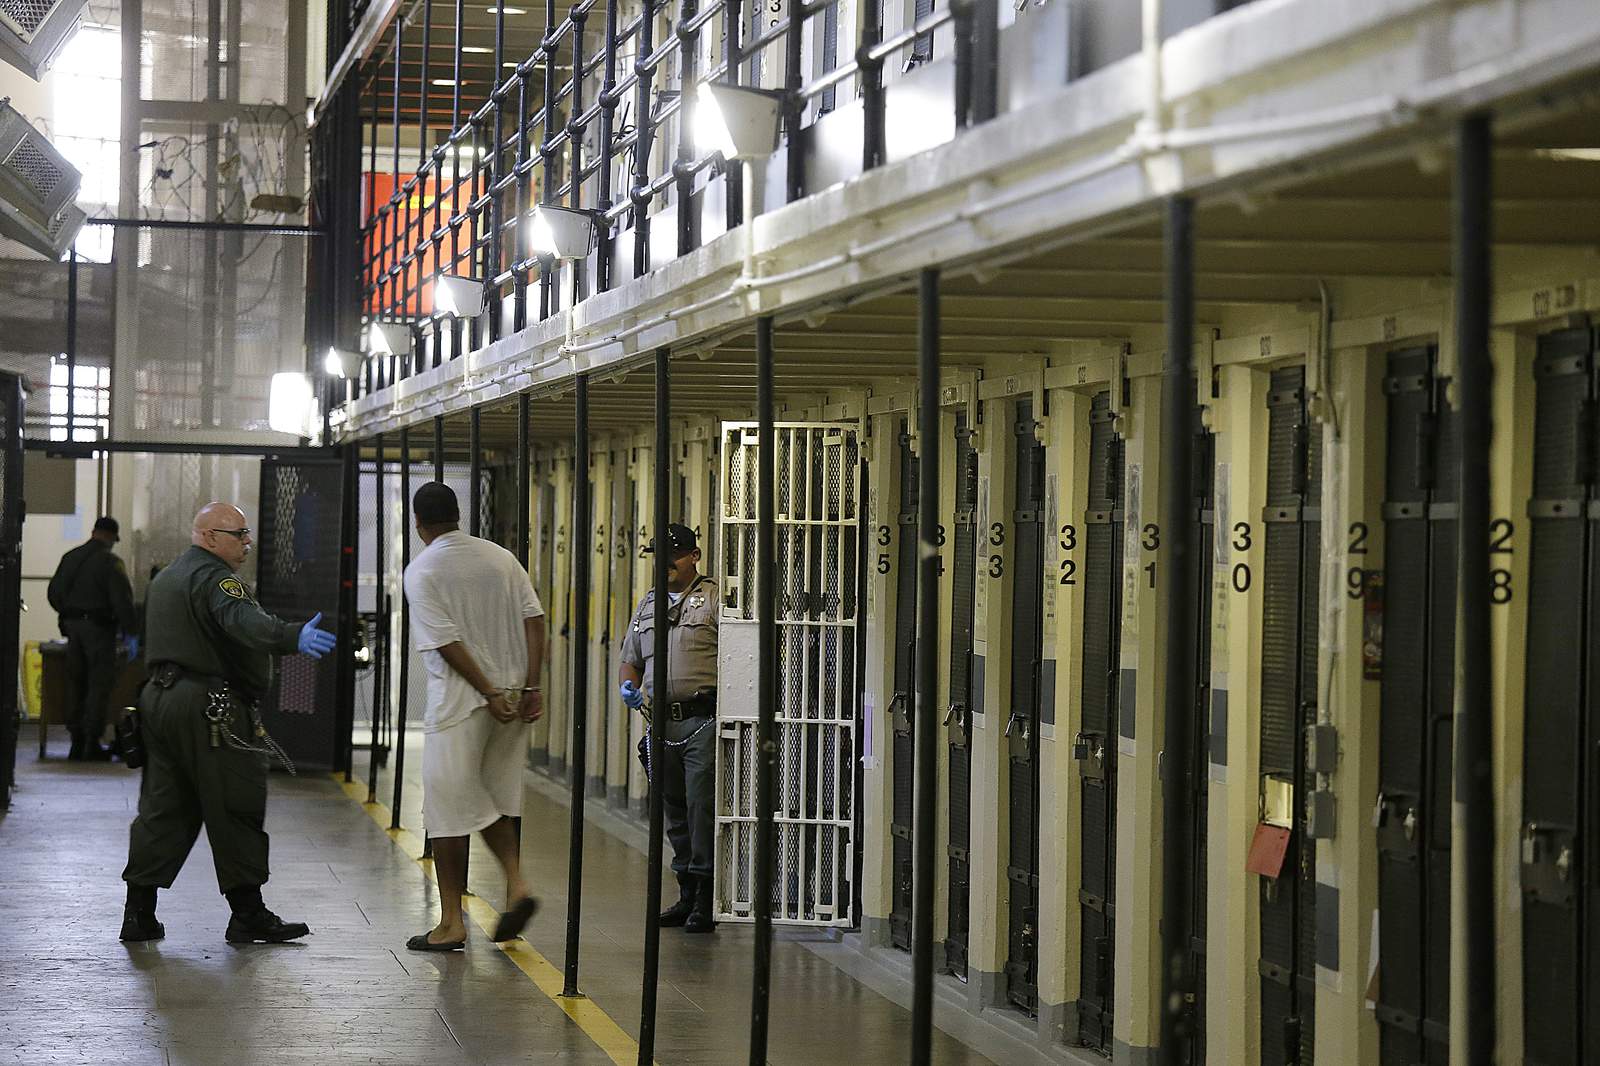 COVID-19 in custody: Alabama ranks 9th for inmate deaths